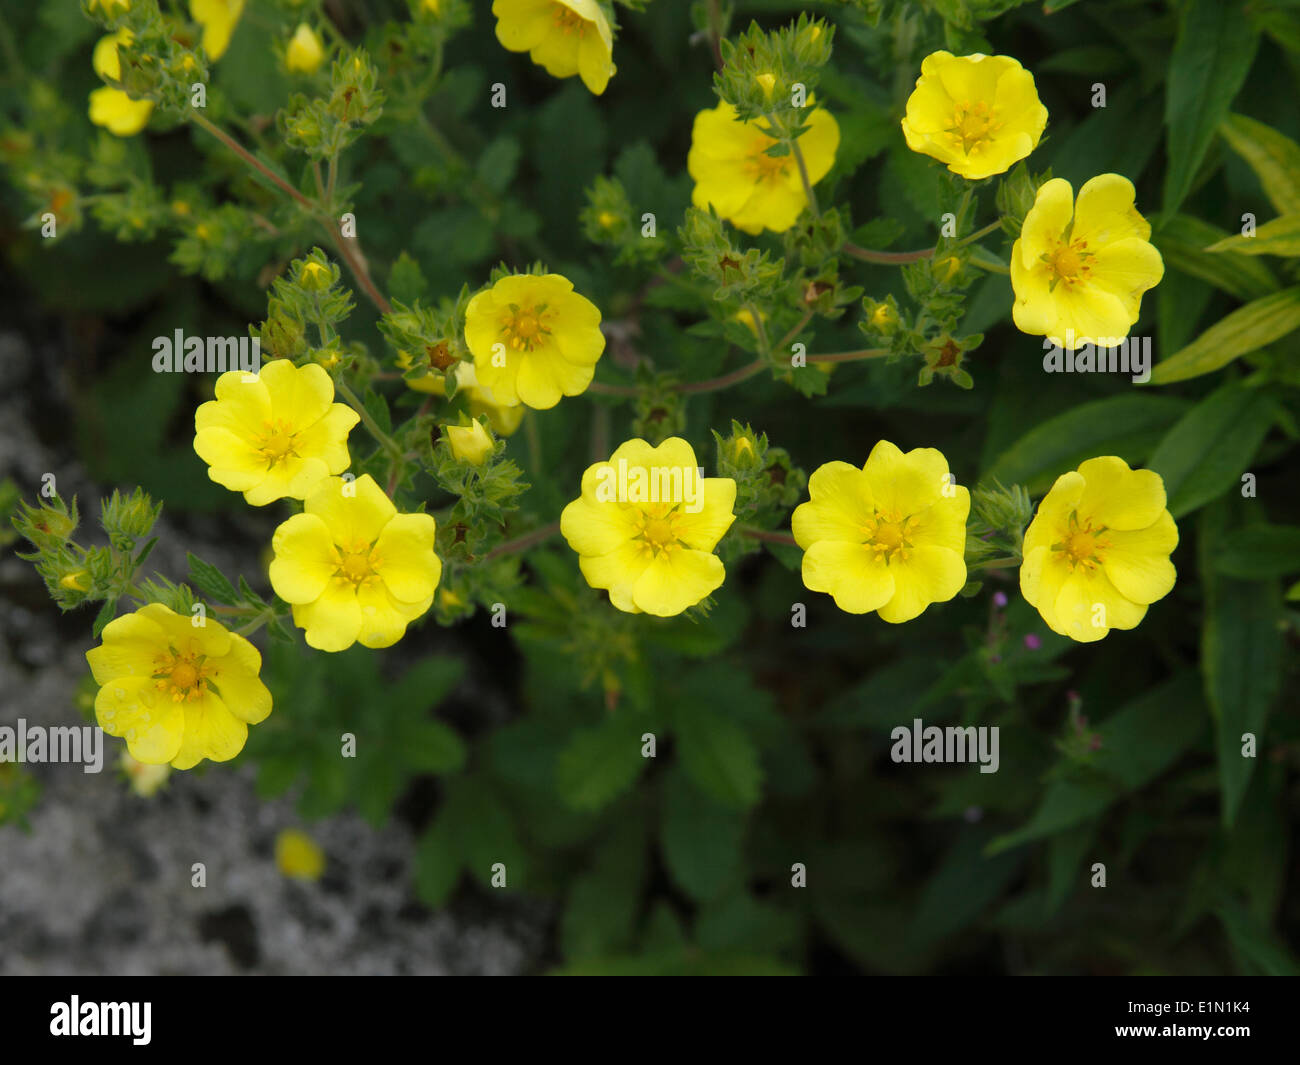 Potentilla fruticosa 'Elizabeth' shrub close up of flowers Stock Photo